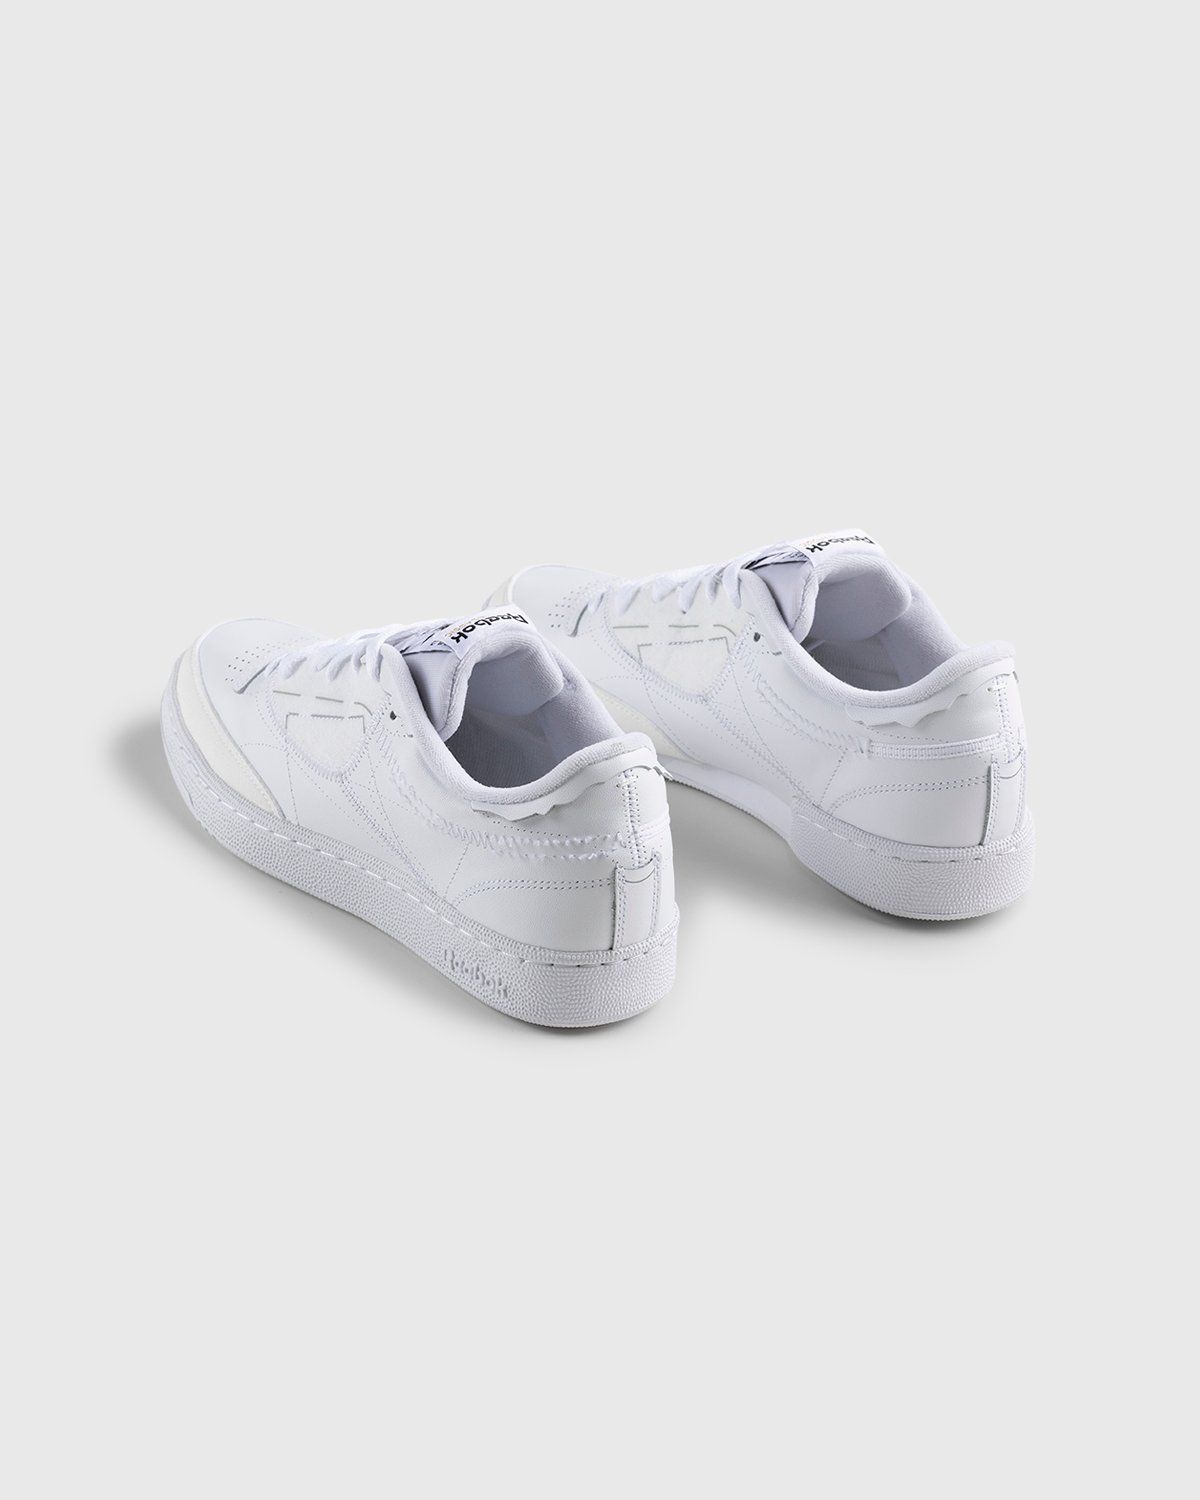 Maison Margiela x Reebok – Club C Memory Of Footwear White/Black/Footwear White - Image 5